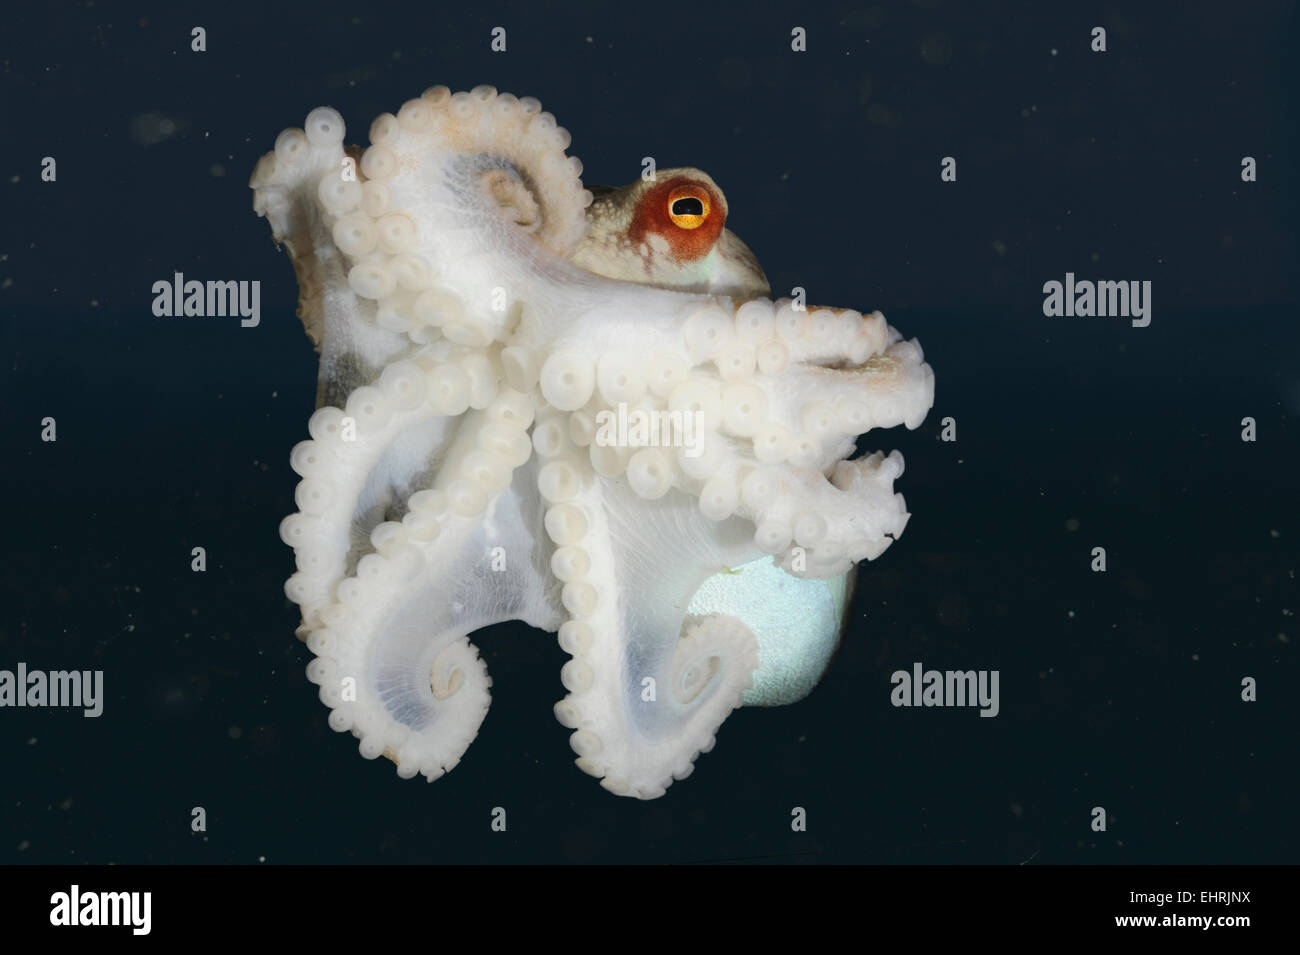 Curled Octopus - Eledone cirrhosa Stock Photo